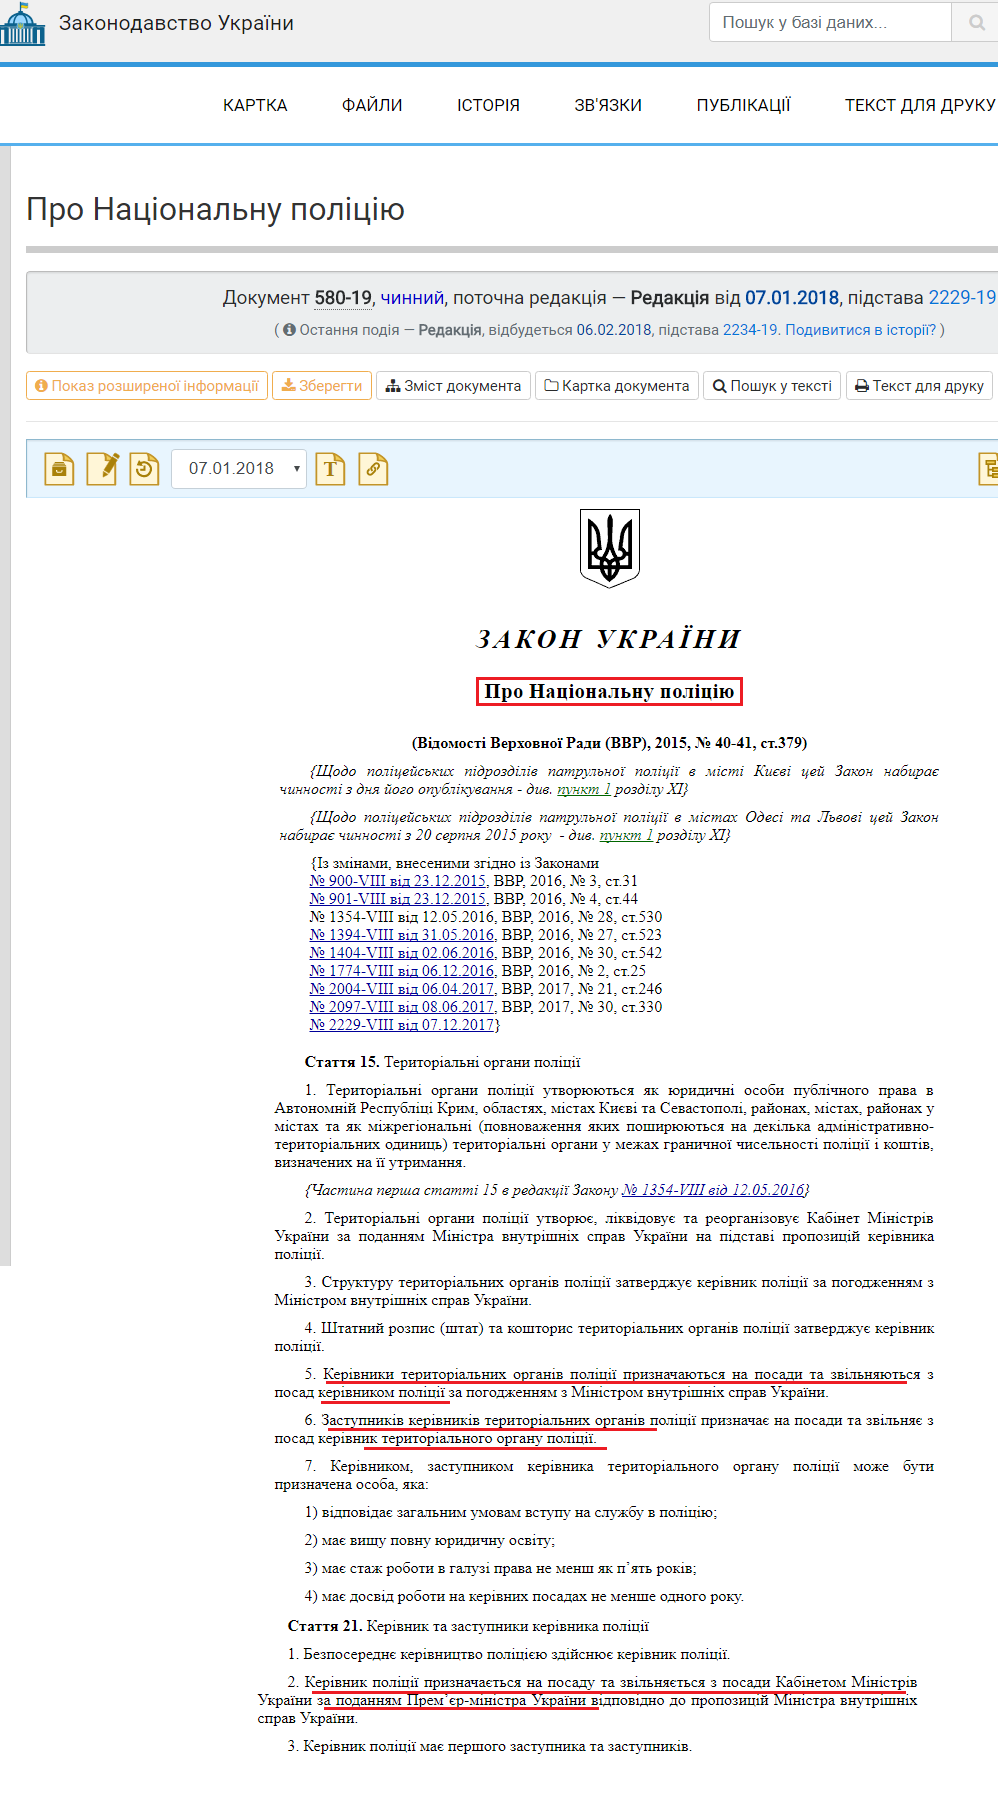 http://zakon0.rada.gov.ua/laws/main/580-19